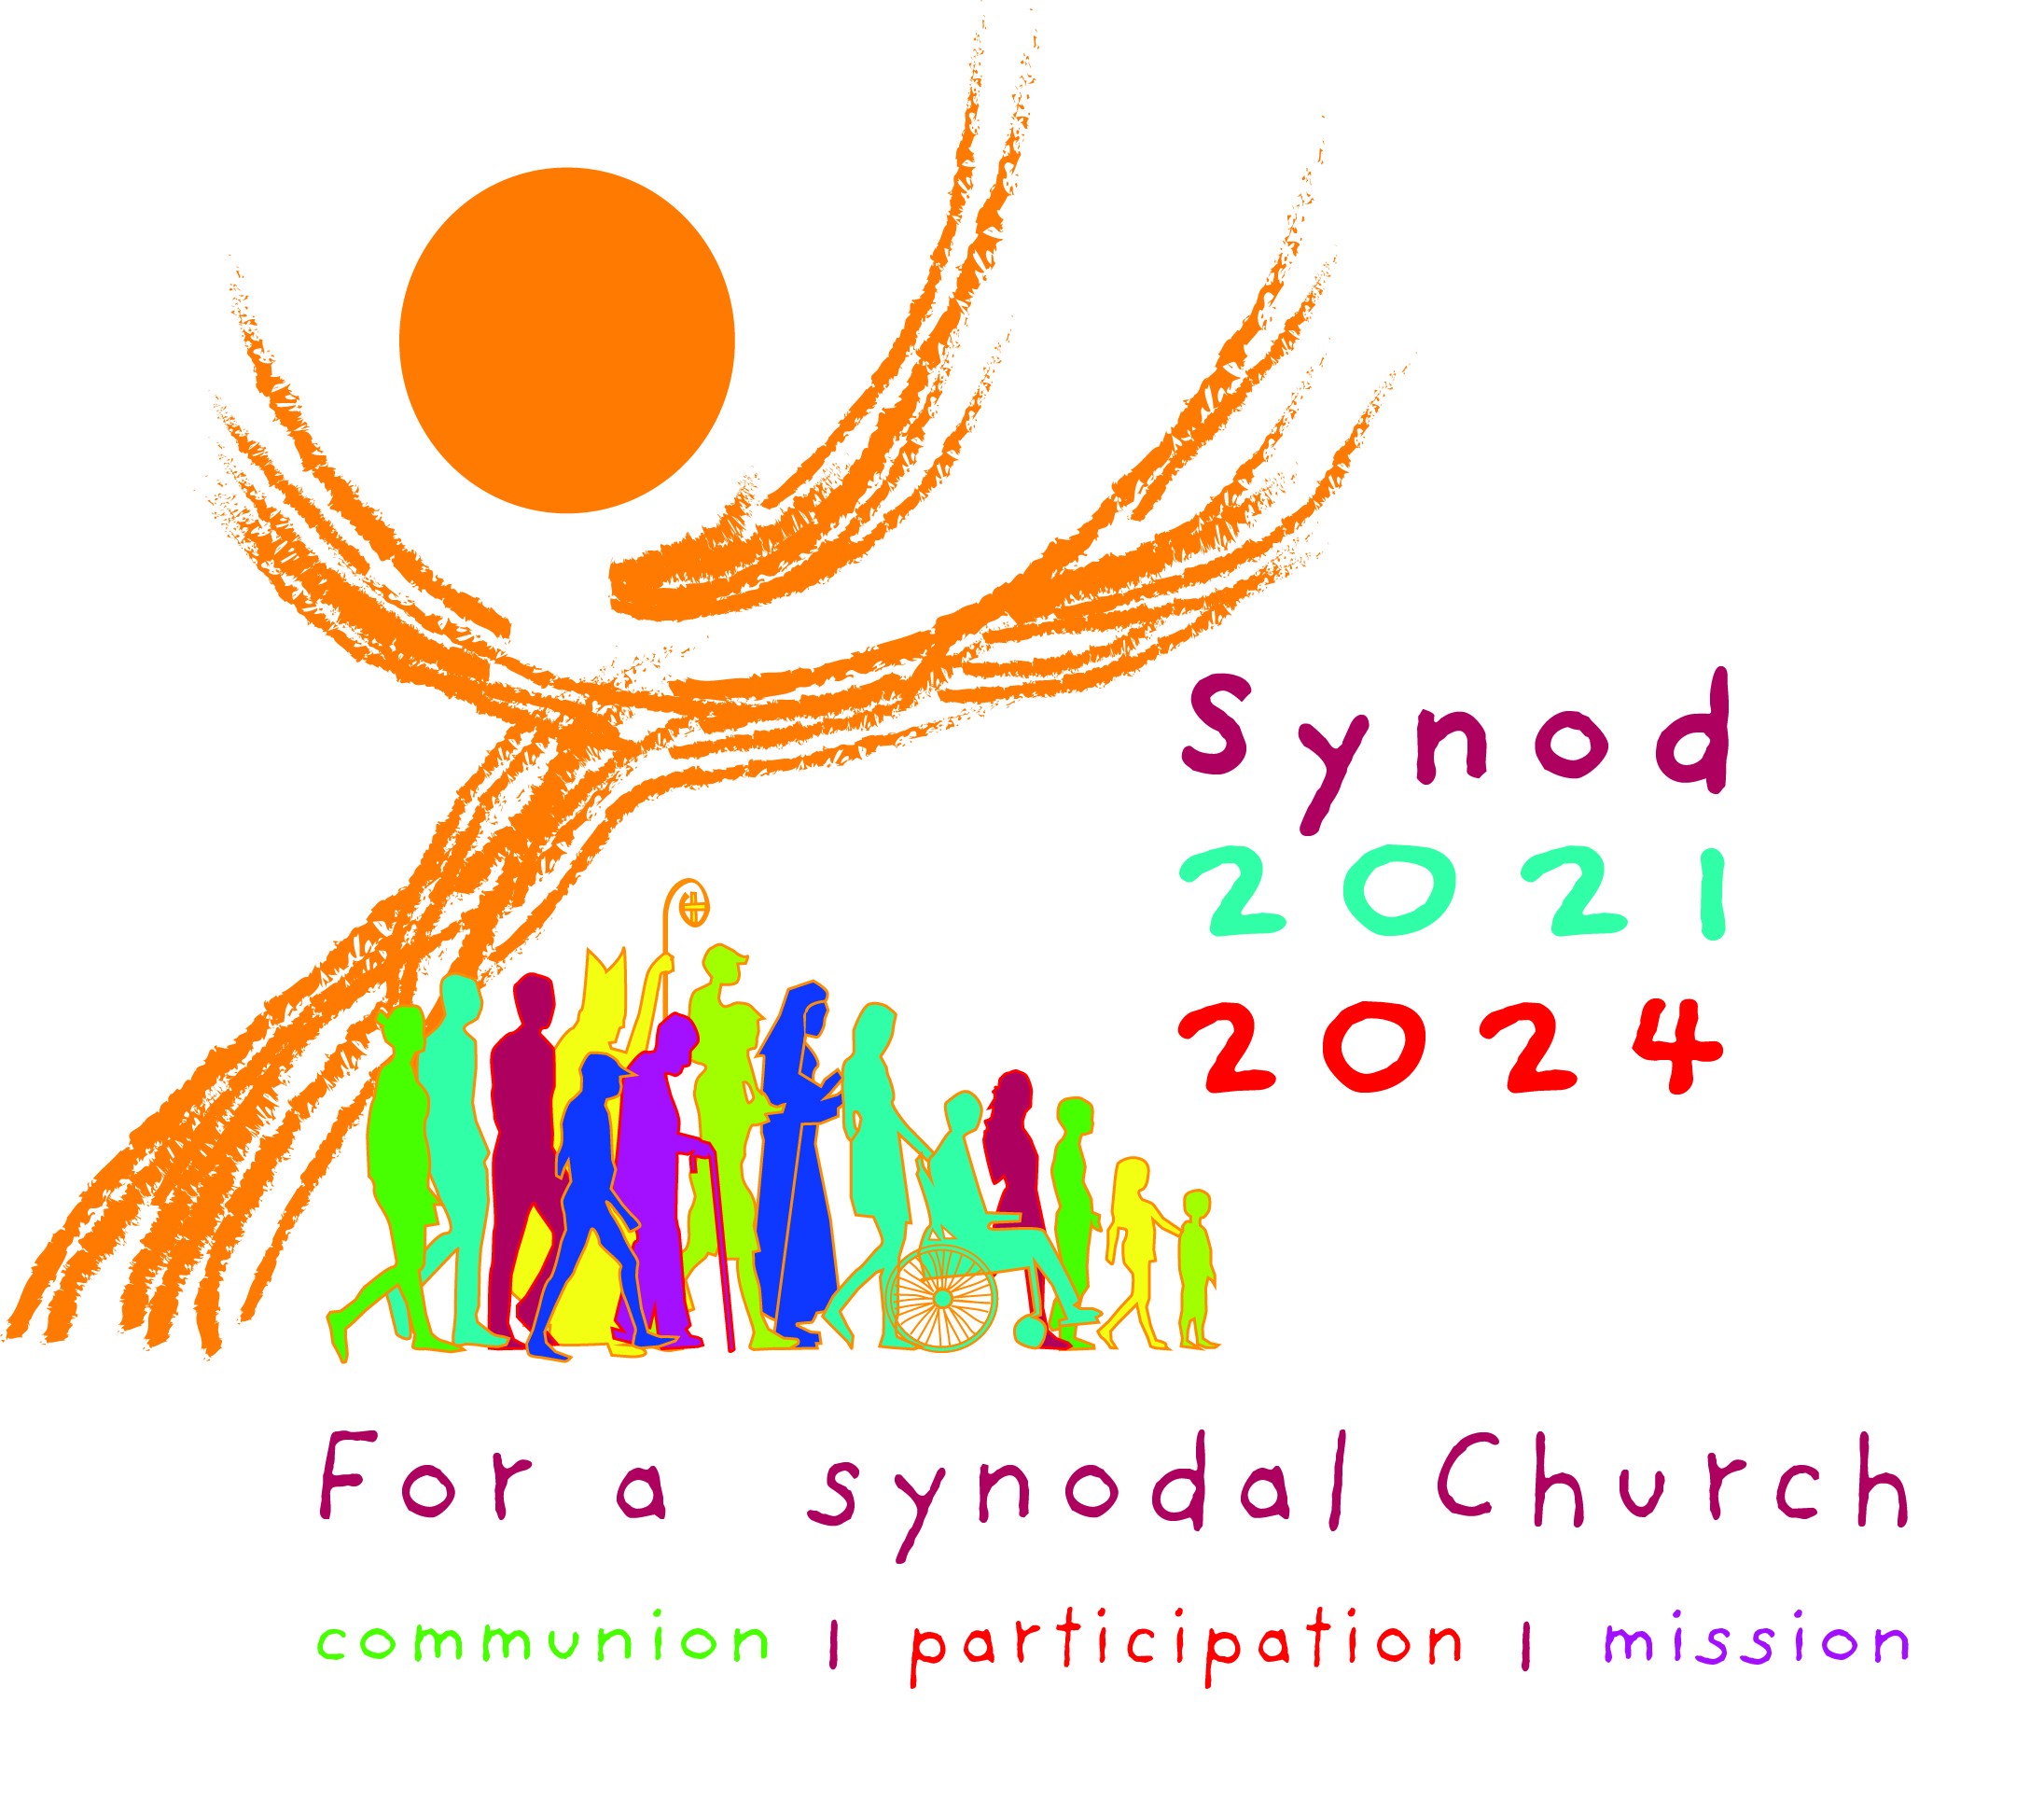 https://www.synod.va/content/dam/synod/common/logos/english/EN_JPEG_2024.jpg